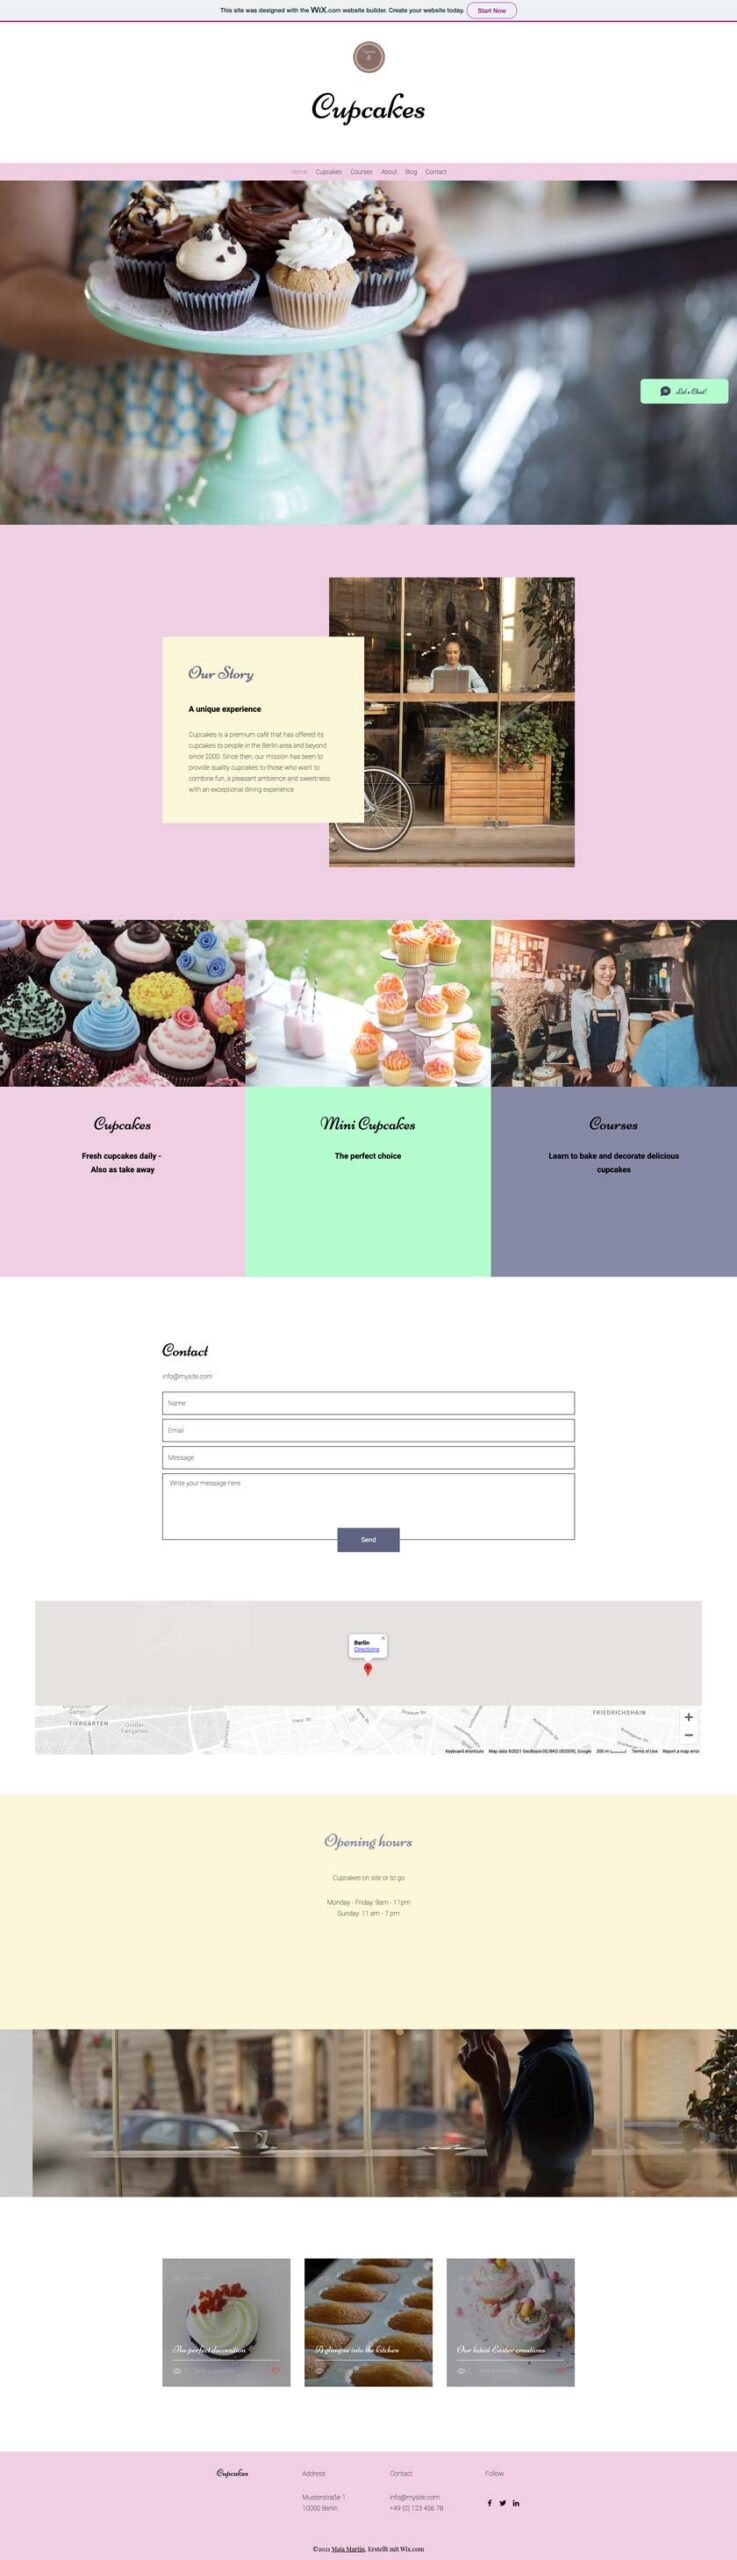 cupcake website